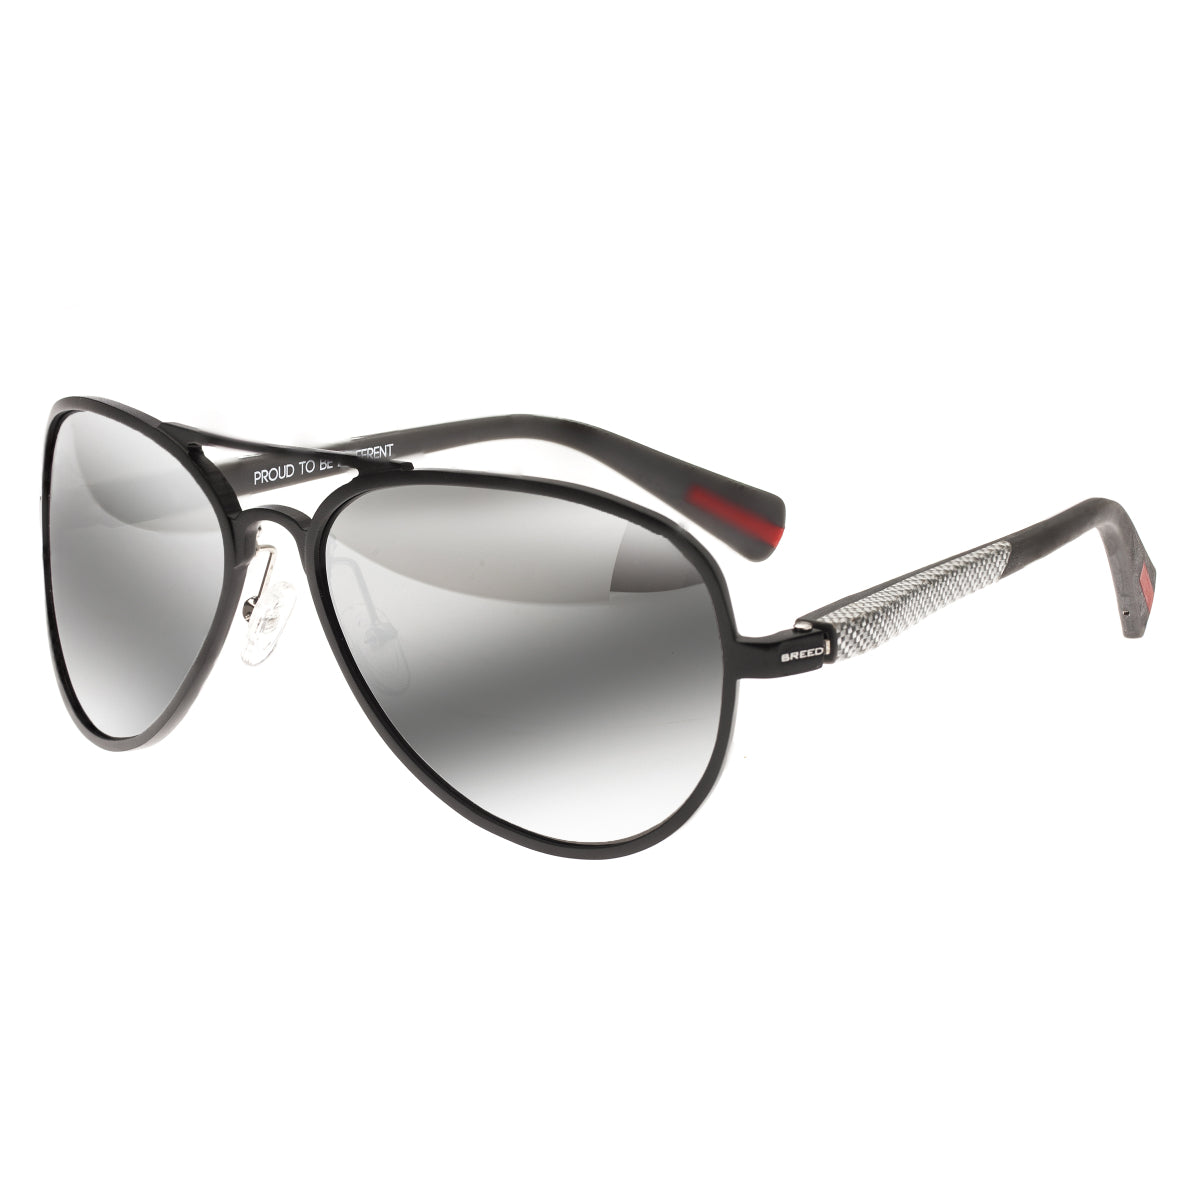 Breed Dorado Titanium Polarized Sunglasses - Black/Black - BSG030BK